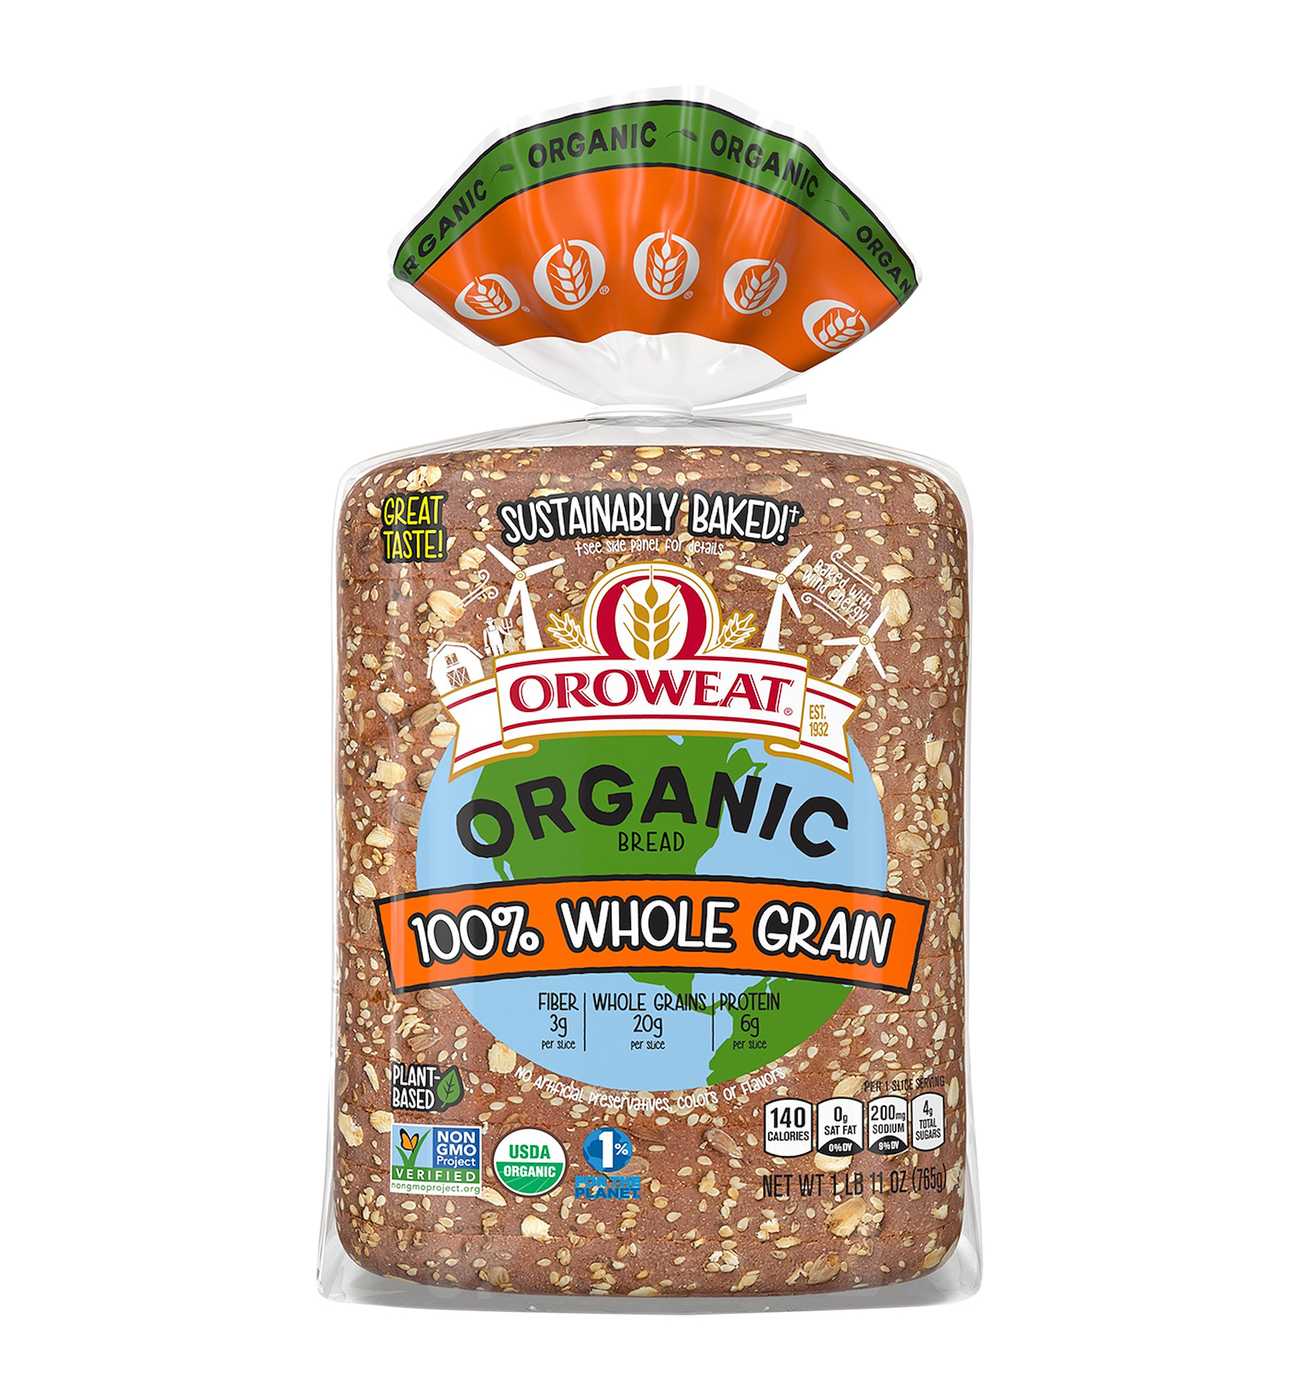 Oroweat Organic 100% Whole Grain Bread; image 1 of 2